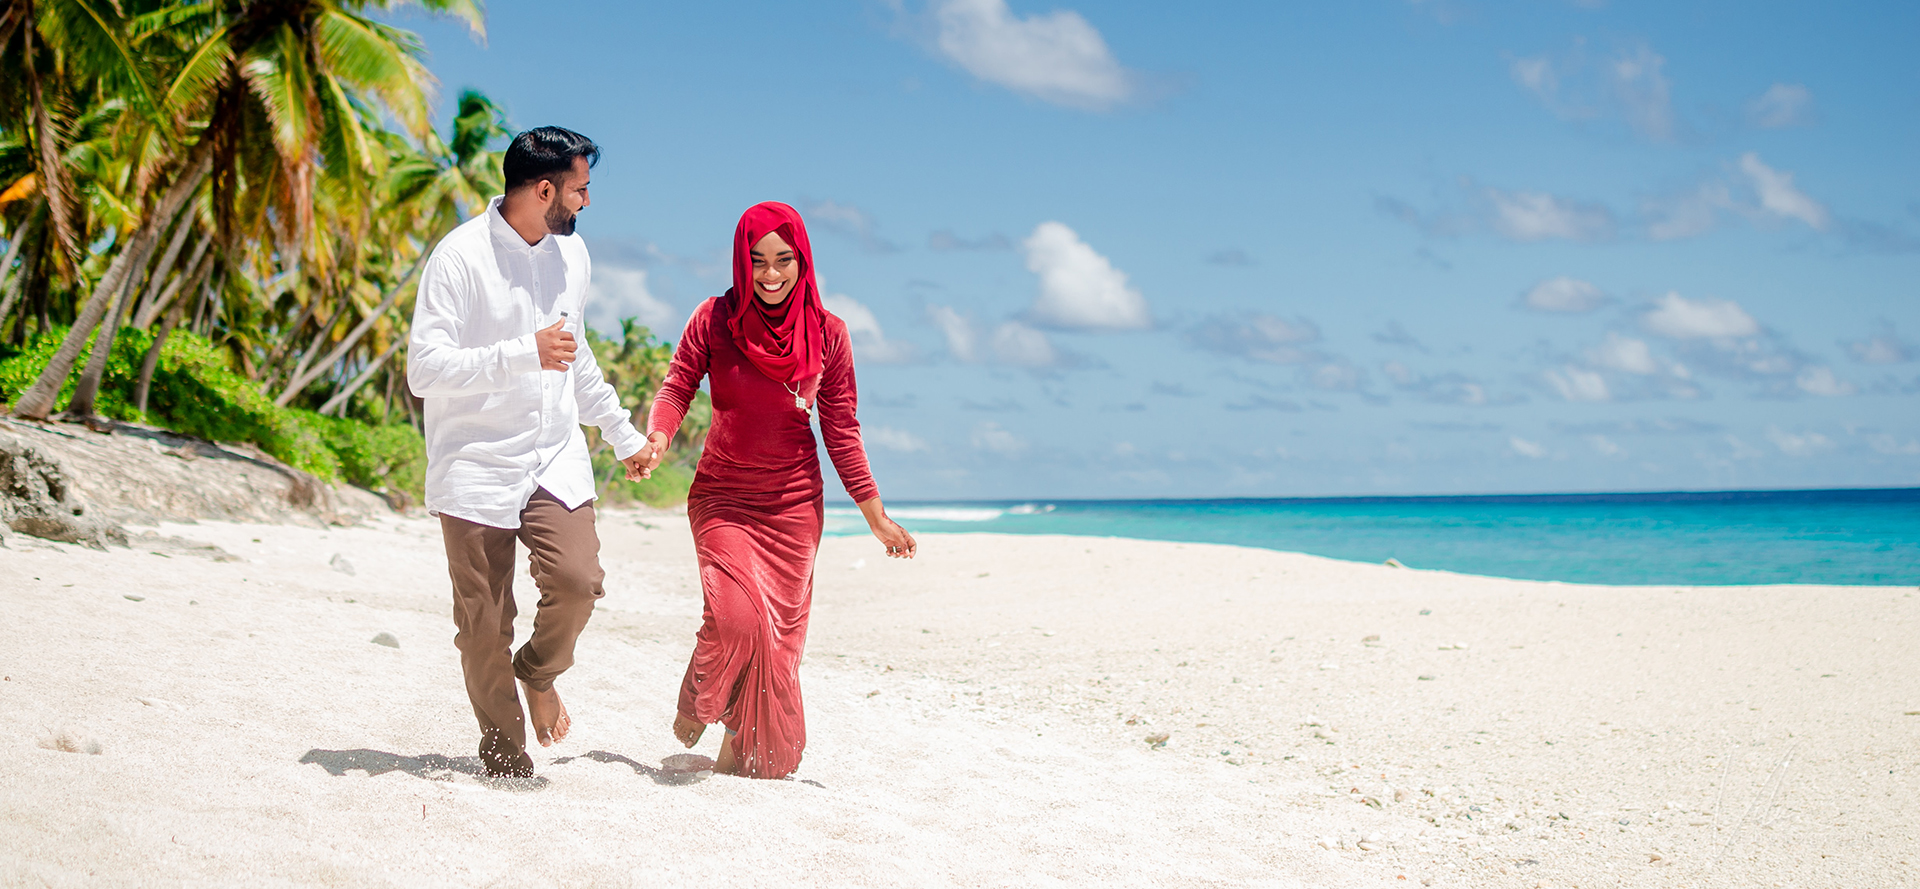 Arab singles on a date stroll along the beach.